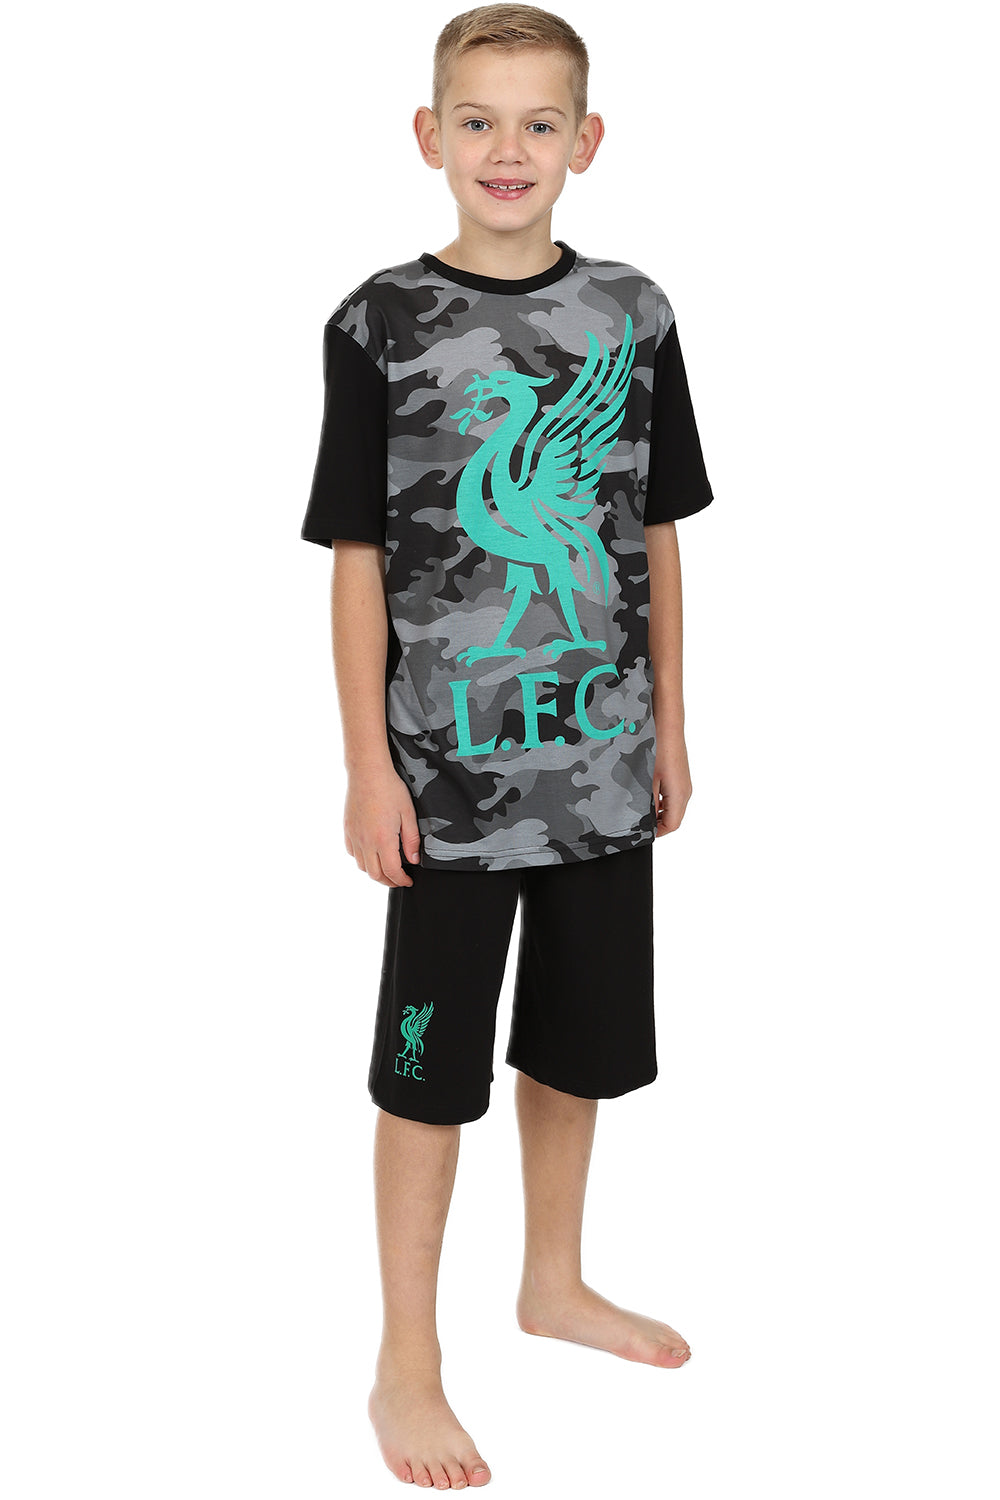 Boys Liverpool F.C Green Camouflage Short LFC Pyjamas